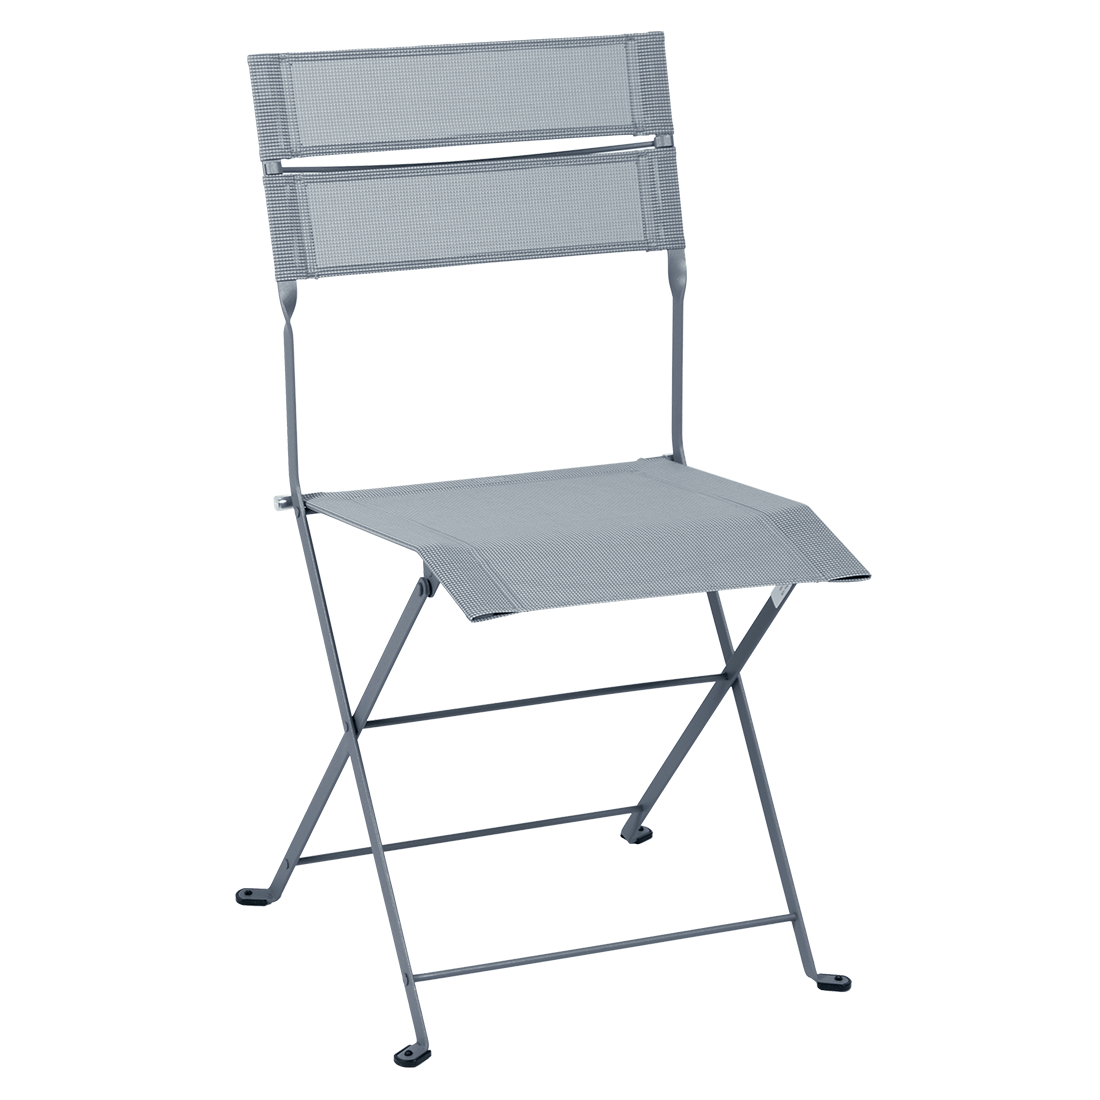  LATITUDE Chair 